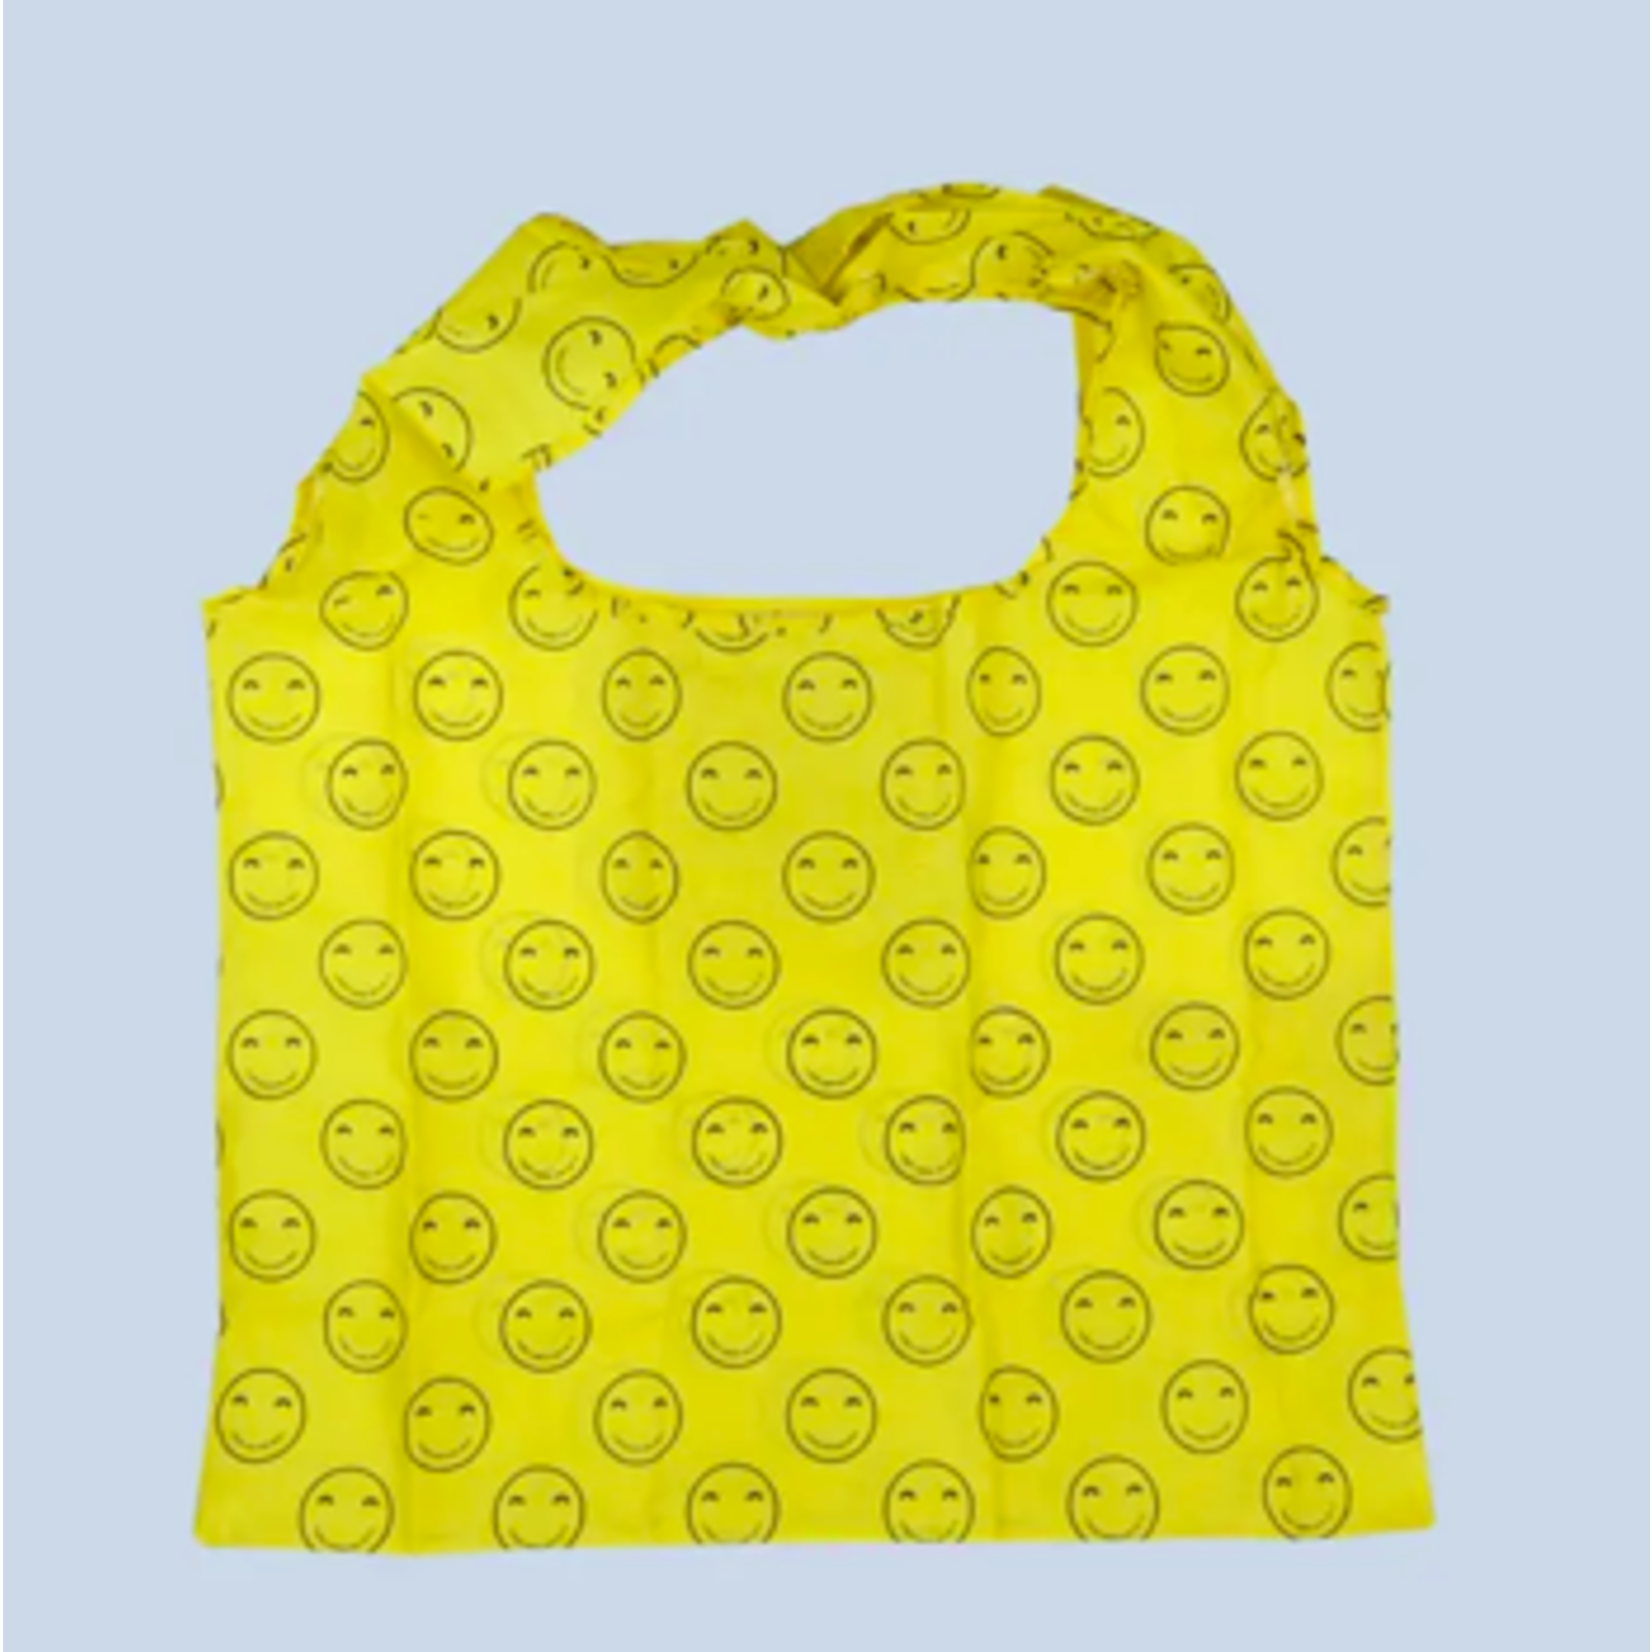 Properly Improper Reusable Nylon Tote Bag - Smiley